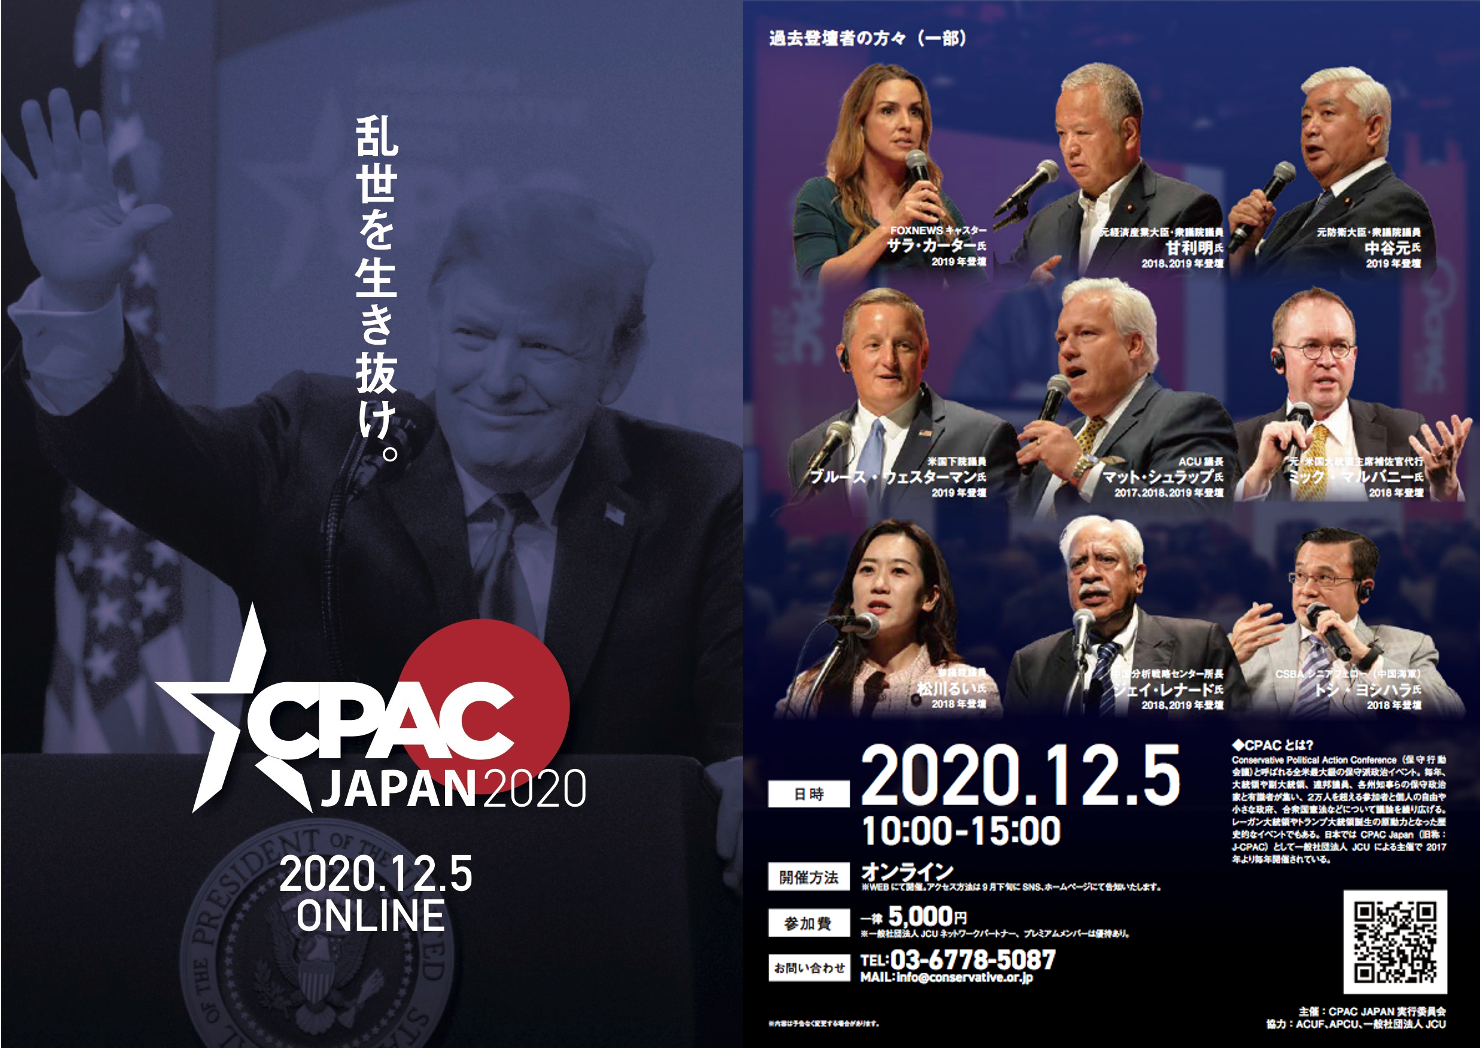 Cpac Japan を12月5日にオンラインで開催決定のお知らせ Cpac Japan 実行委員会のプレスリリース